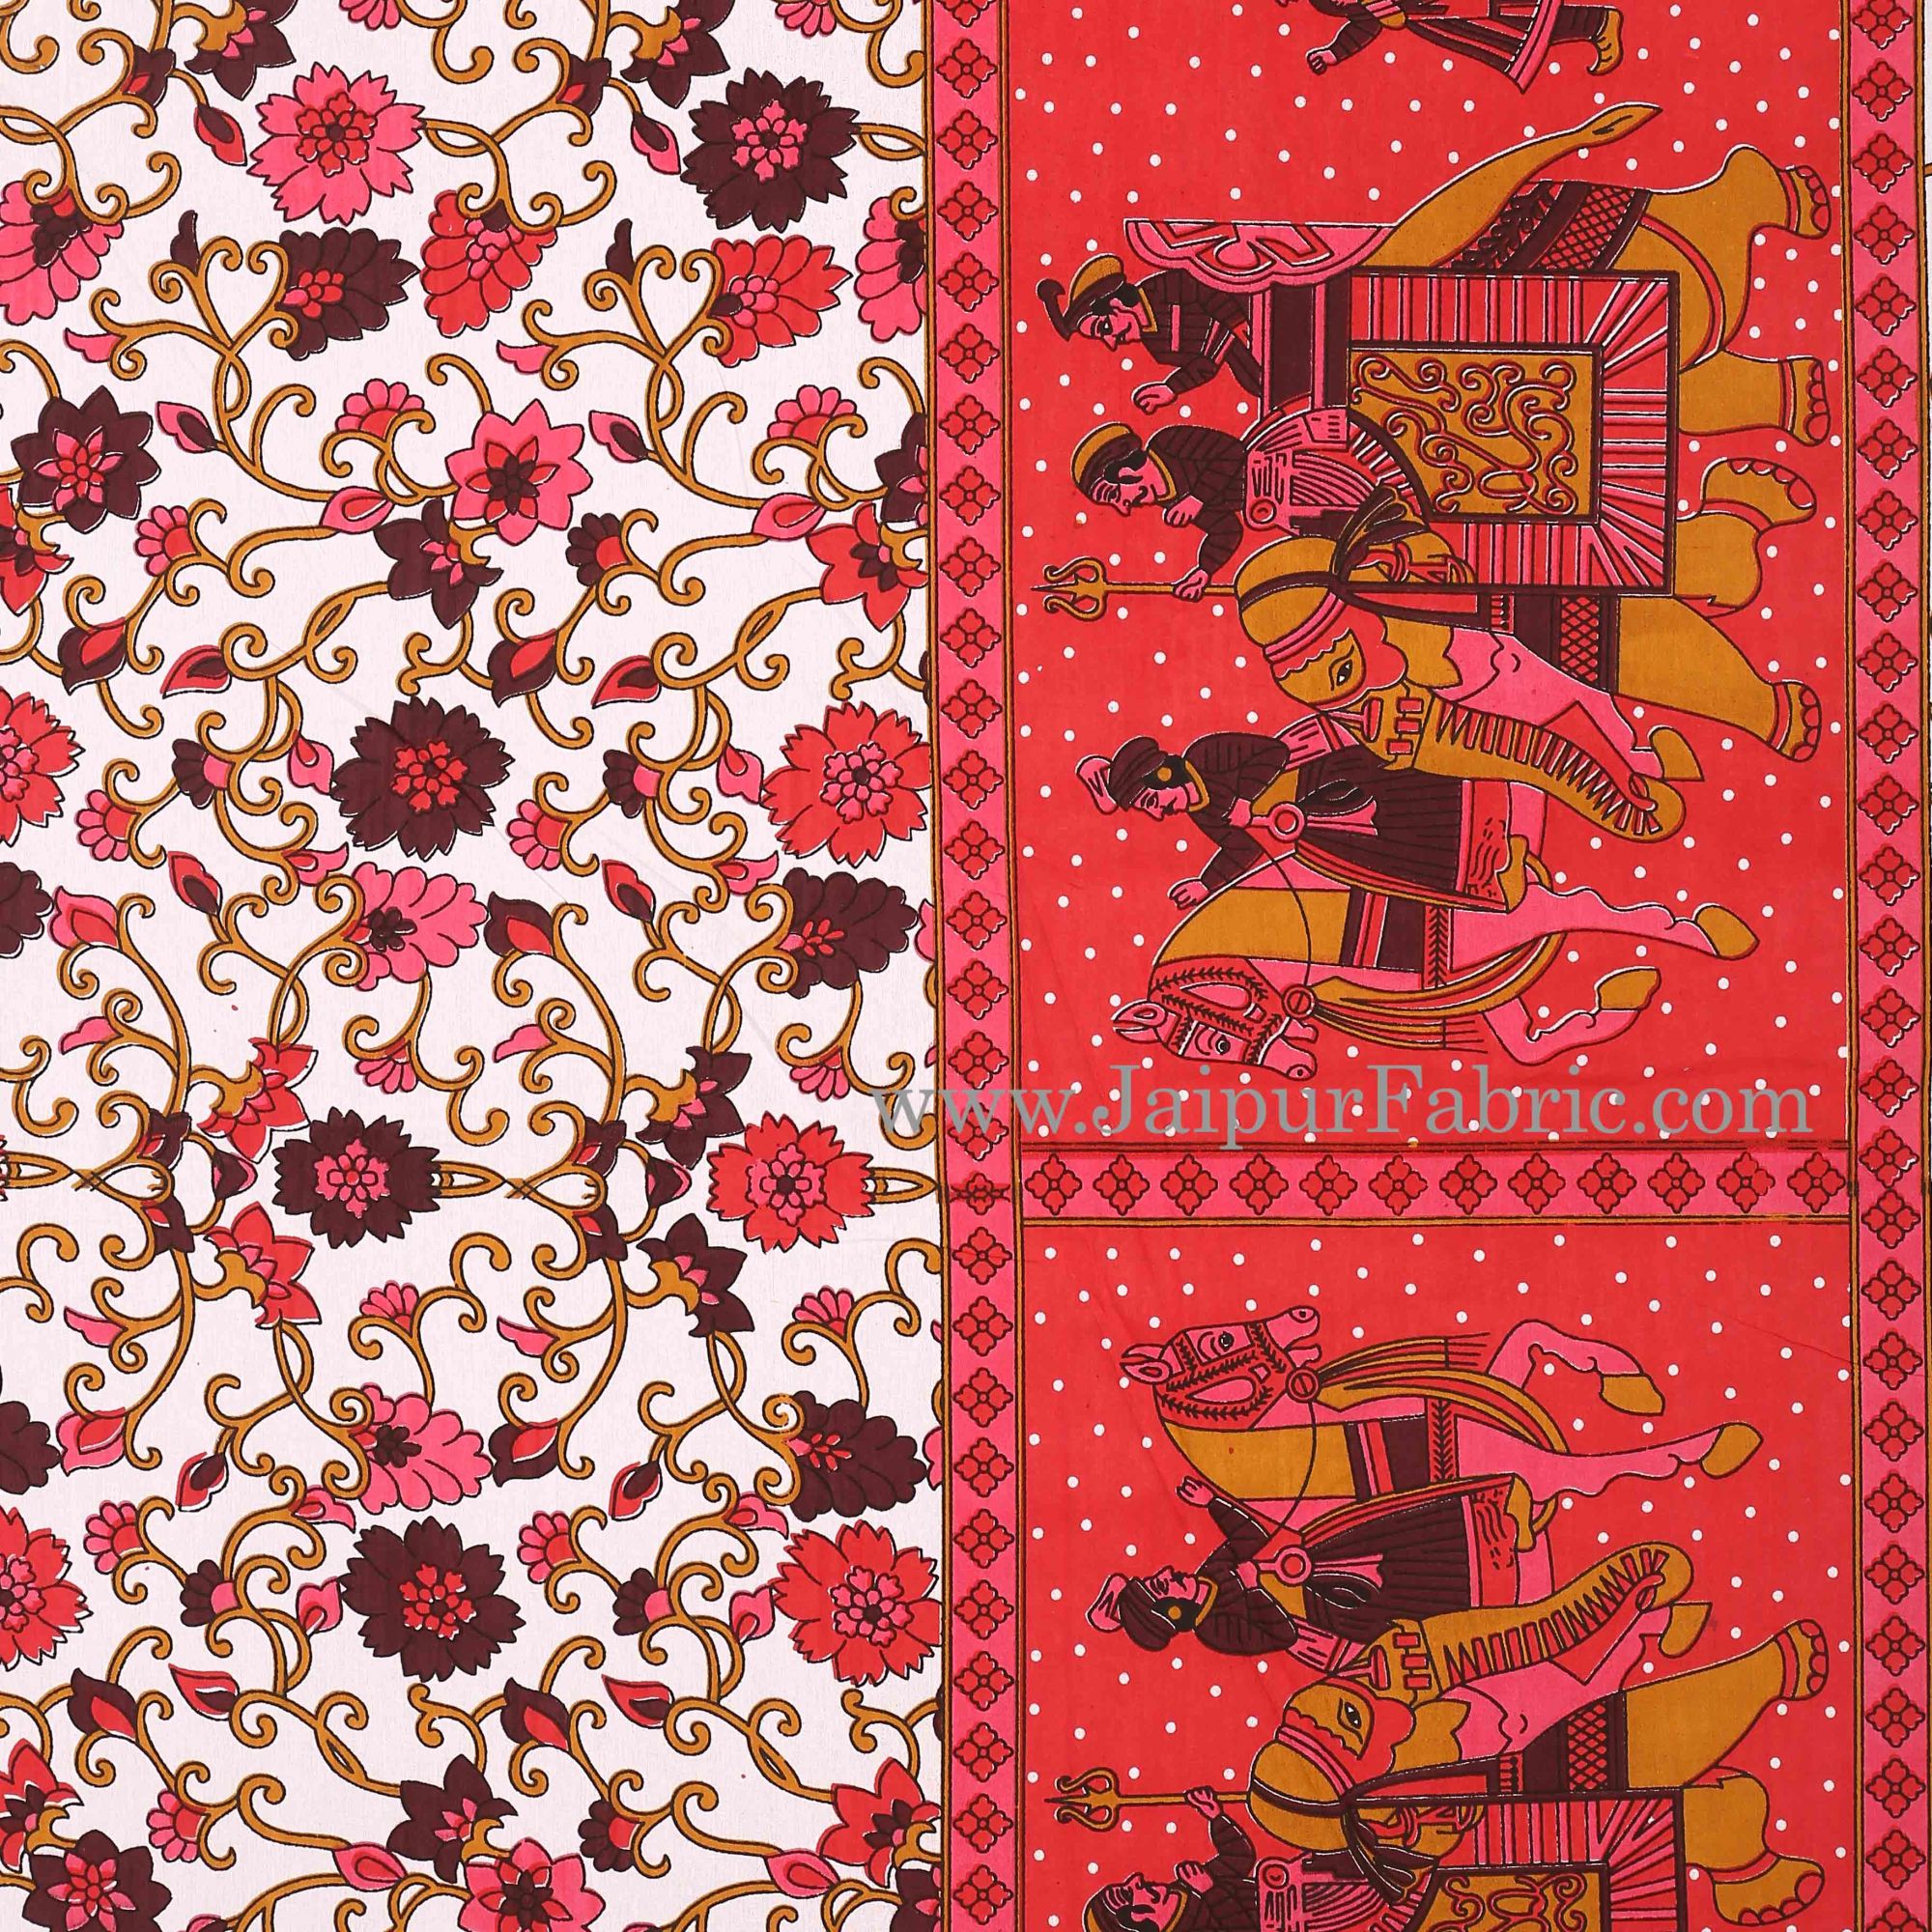 Maroon Gangaur Pattern cotton Double Bed sheet